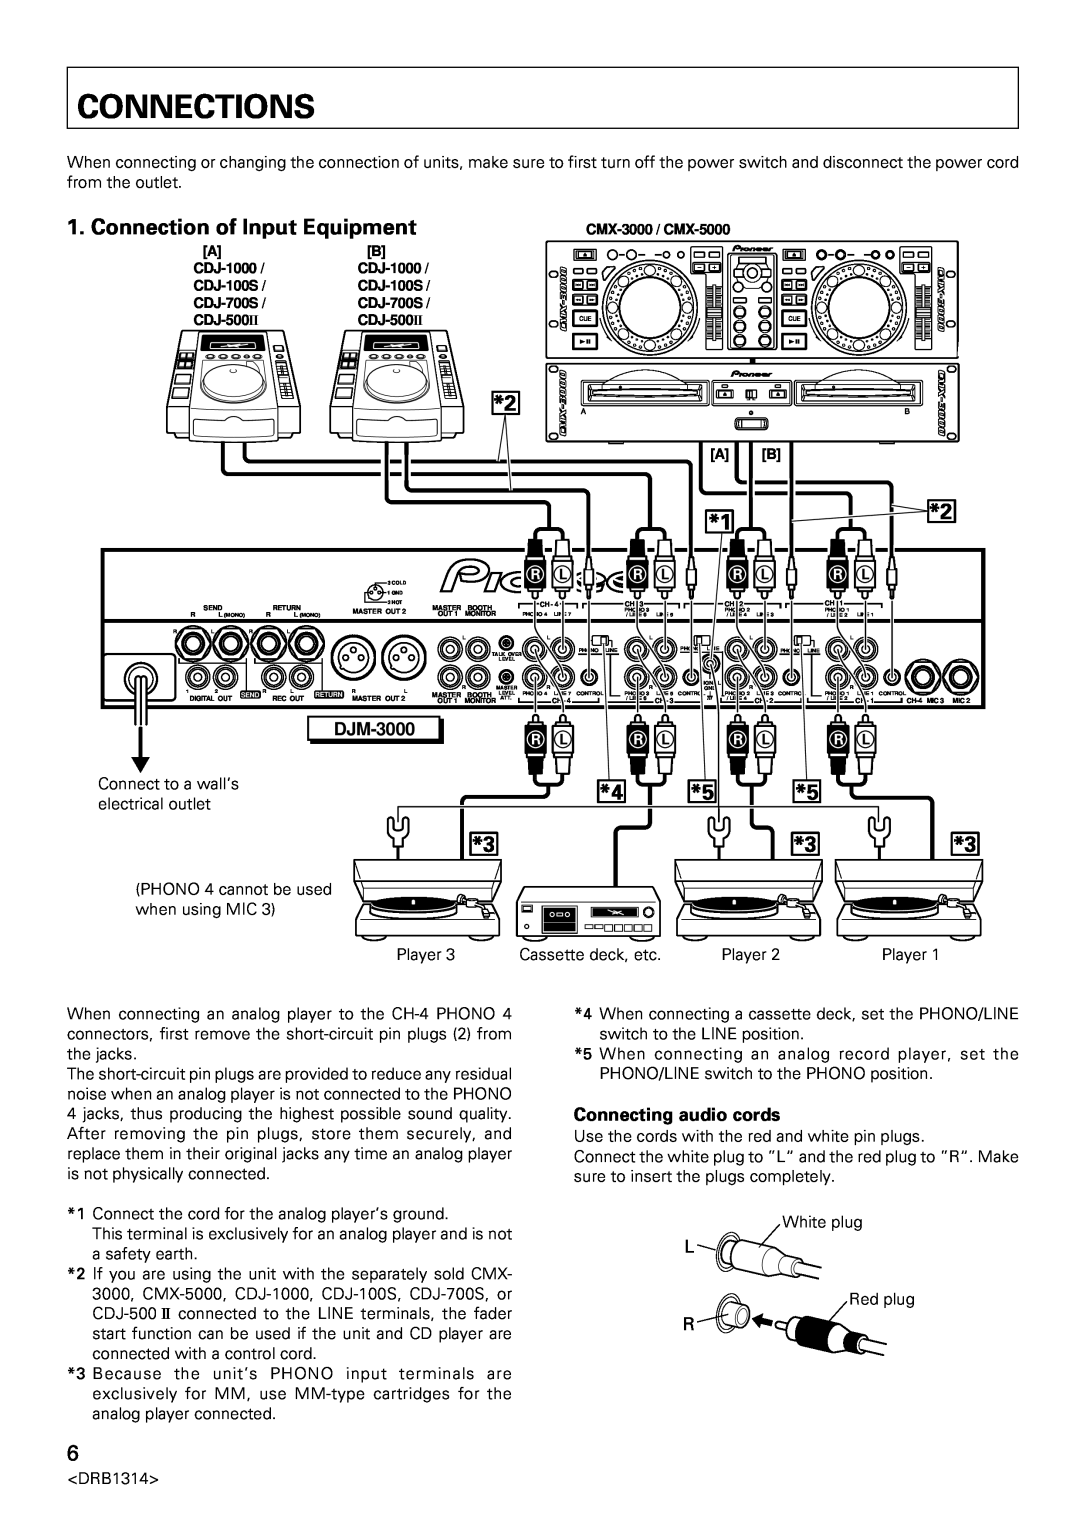 Plantronics DJM-3000 operating instructions Connections, Connection of Input Equipment, Connecting audio cords 